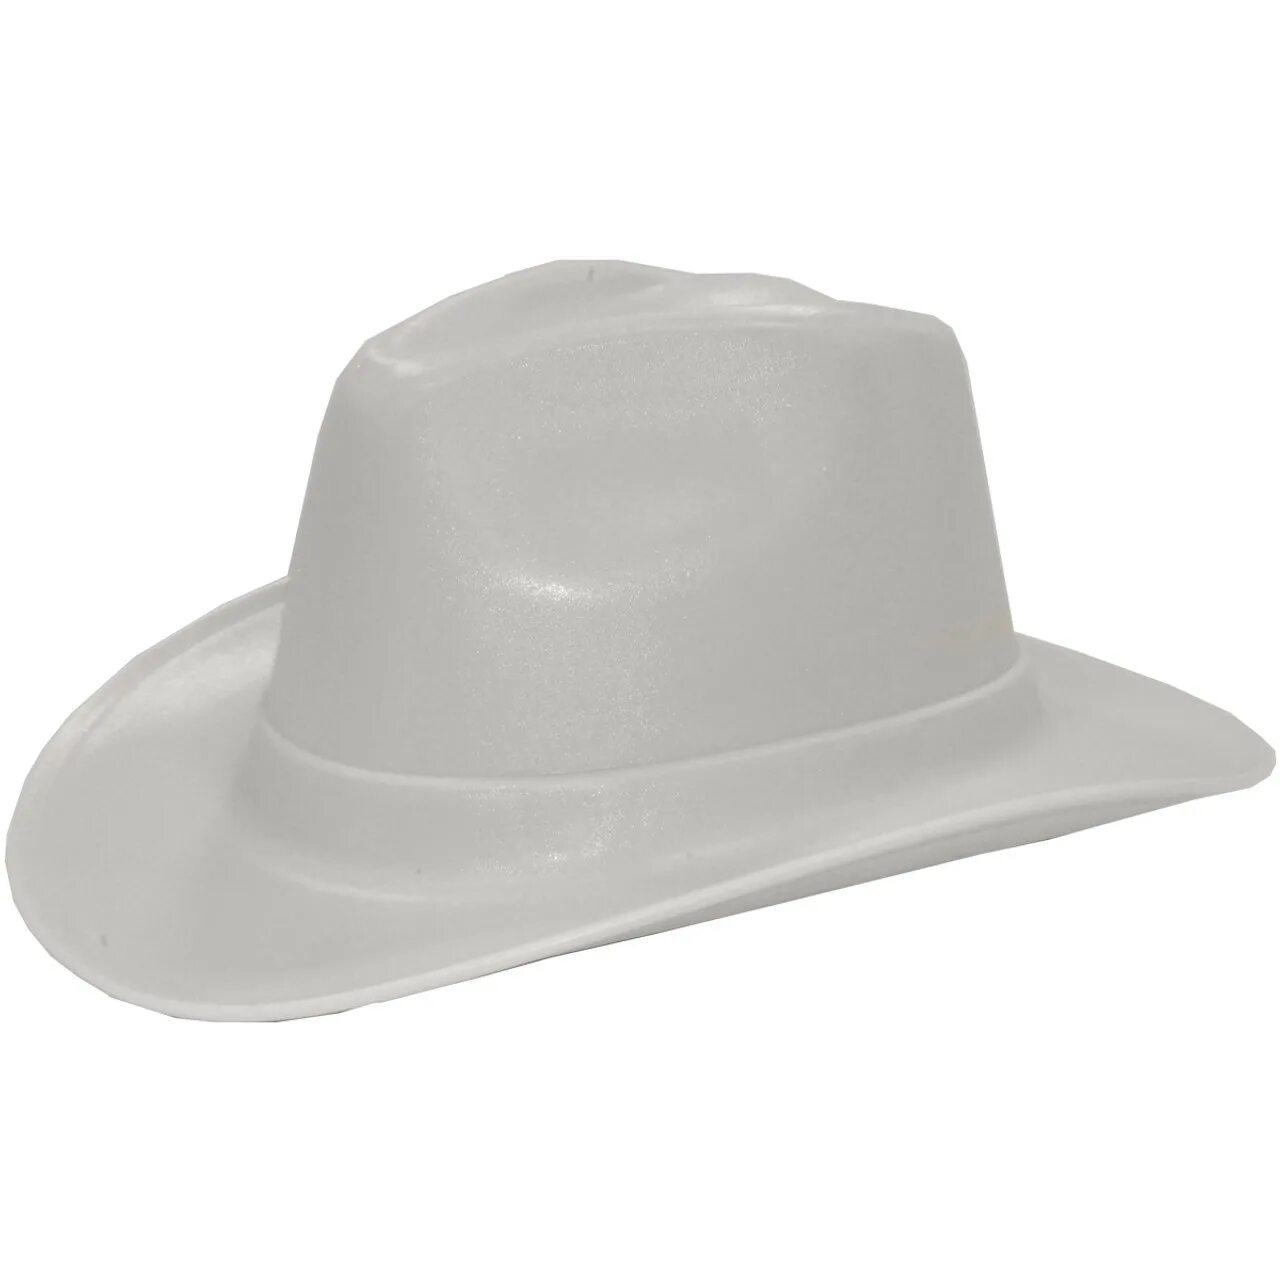 Vulka vcb100-00 hard hat строительная. Cowboy hat каска. Vulcan Cowboy Style hard hat White. Каска защитная ковбойская шляпа